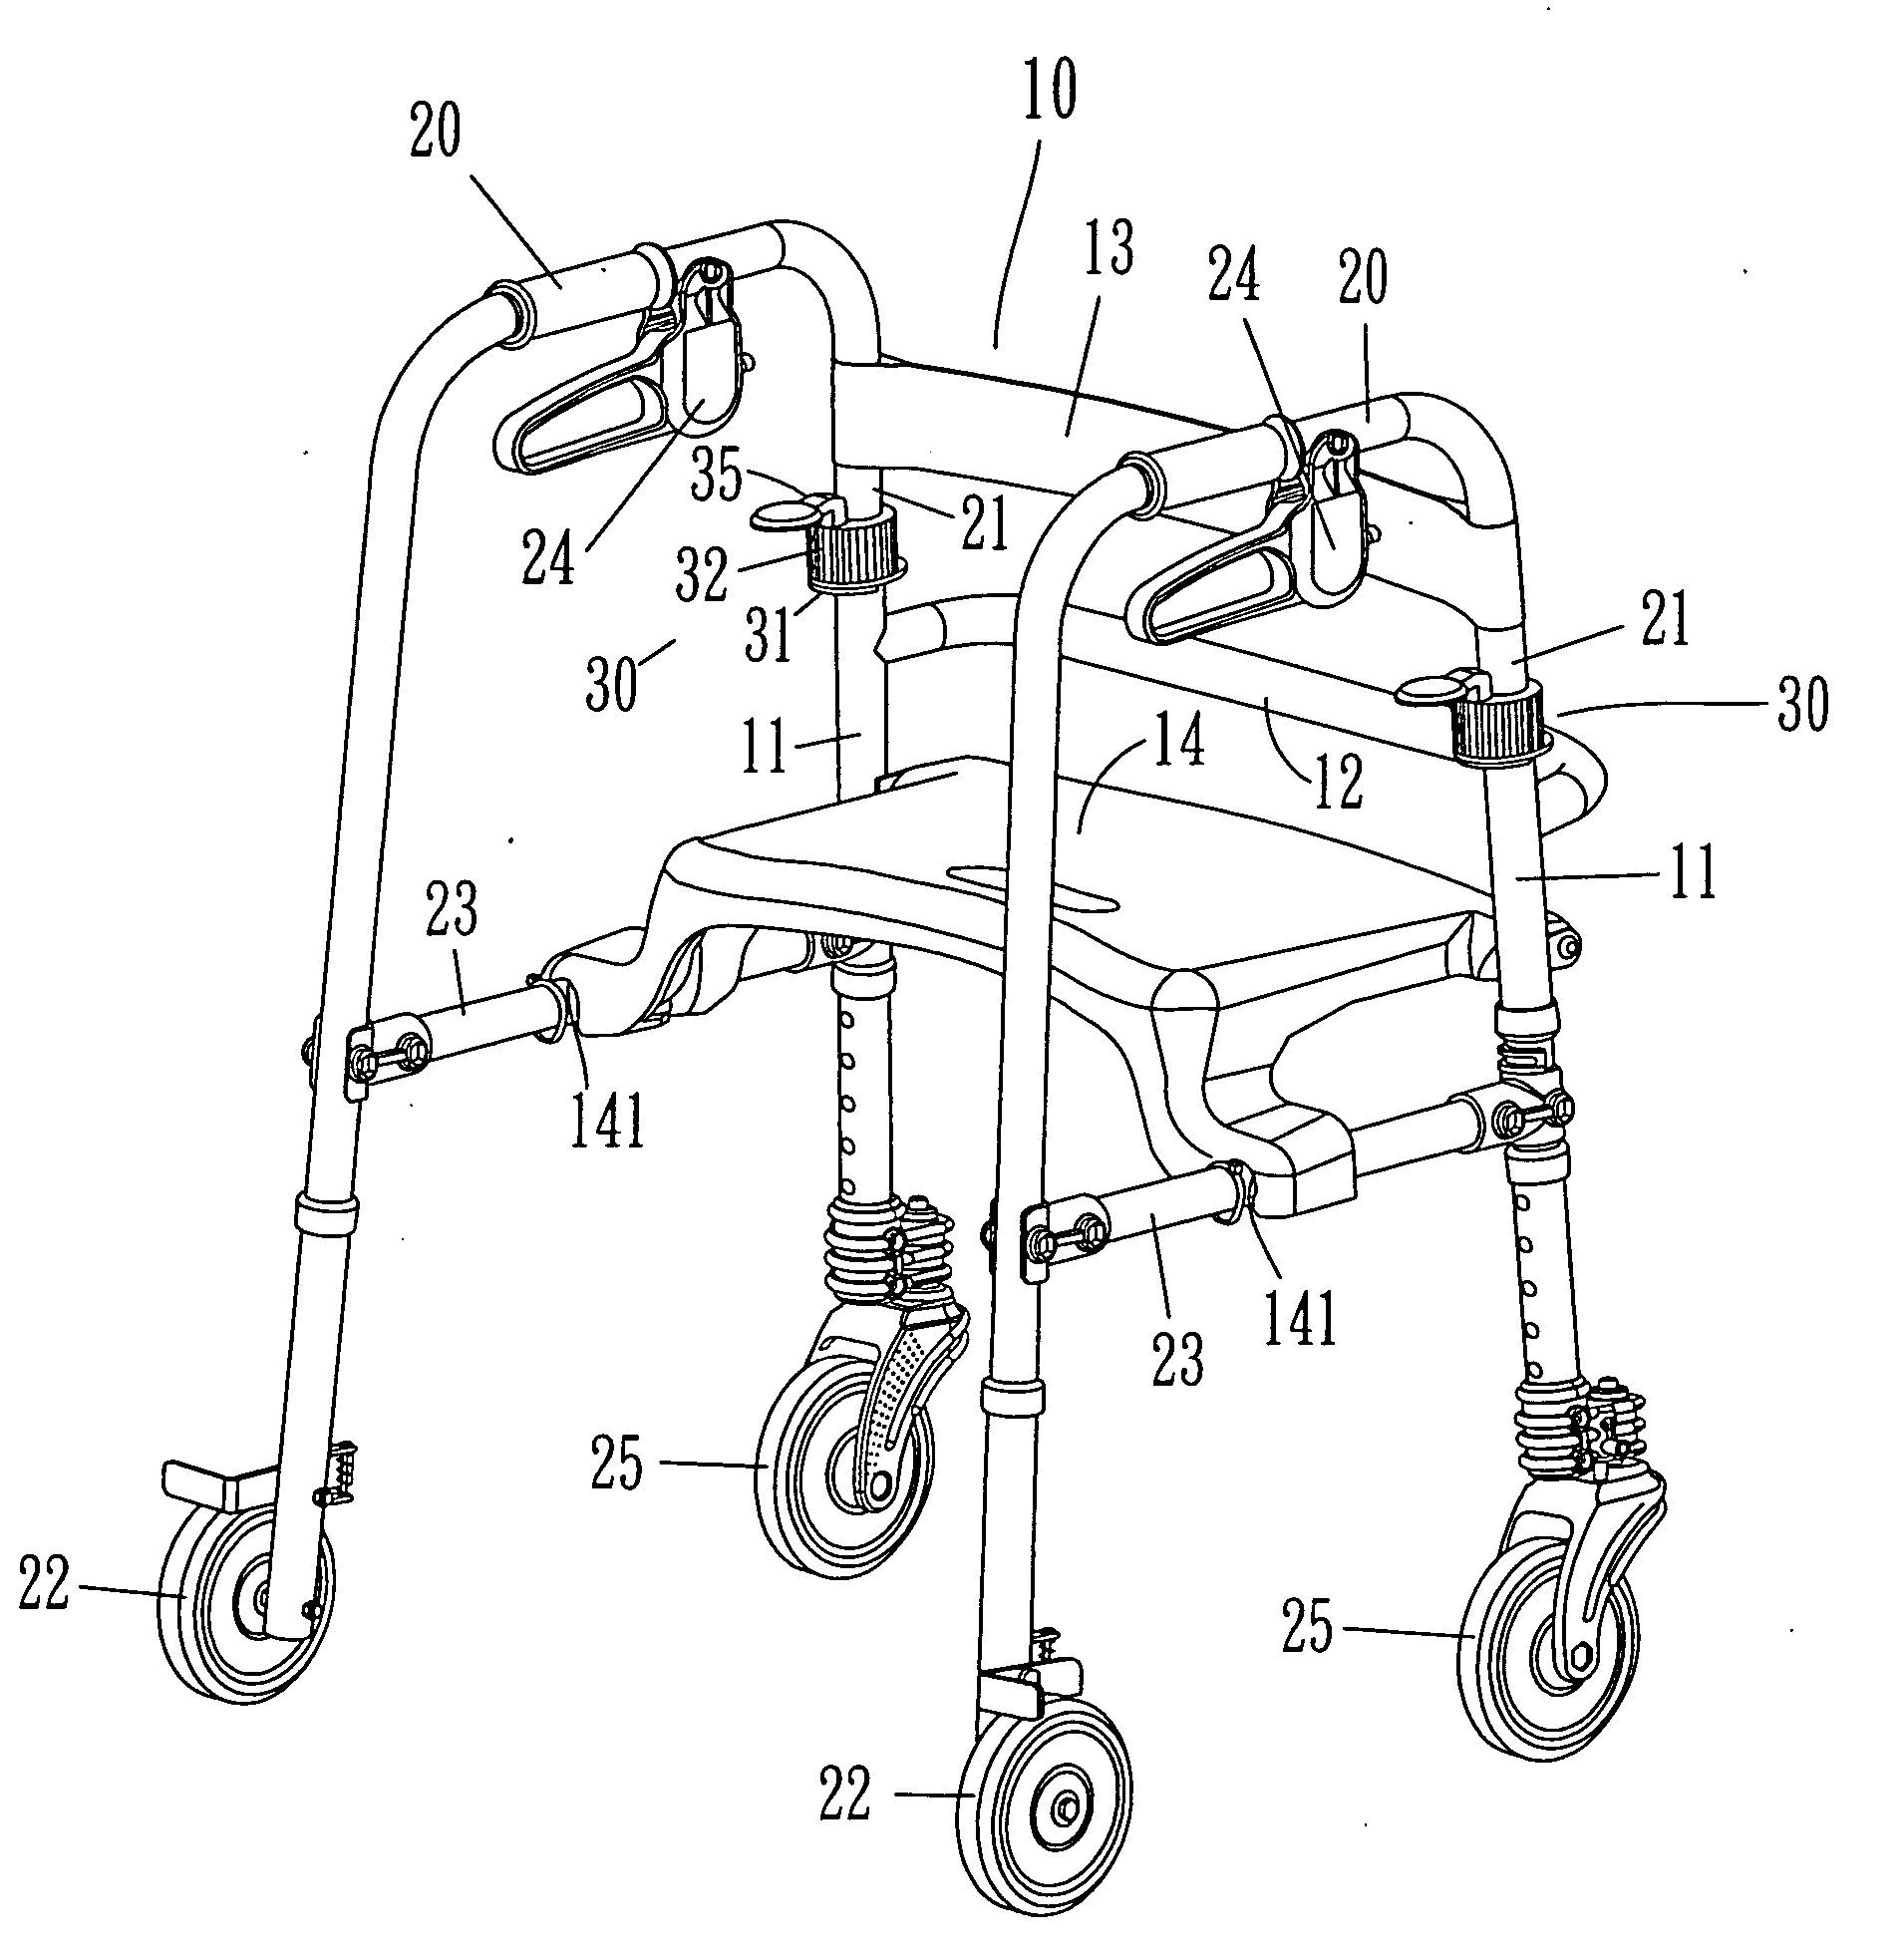 Lock assembly of foldable walker